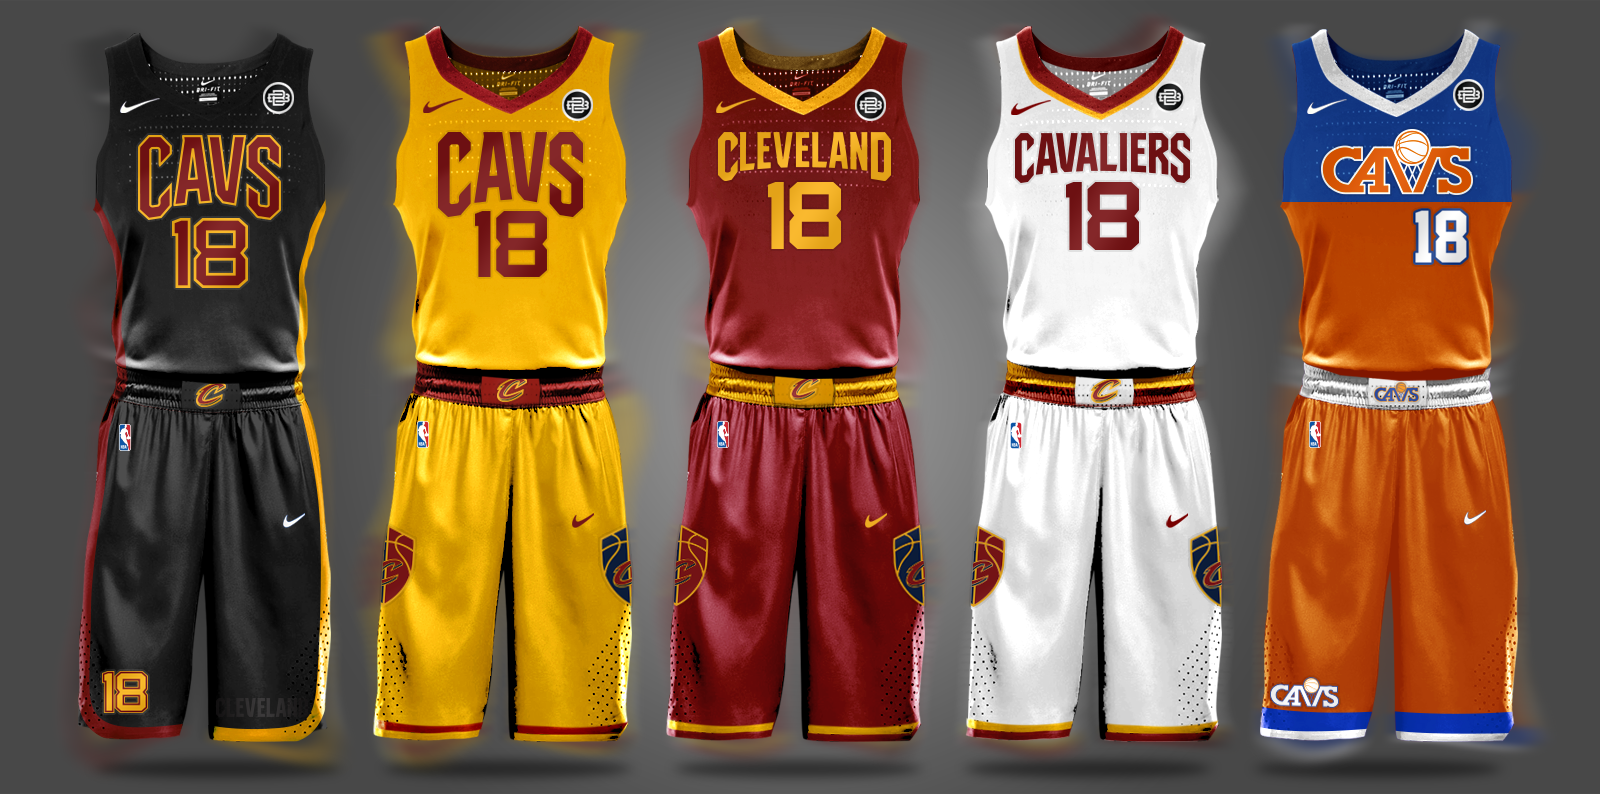 cavaliers jersey design 2018